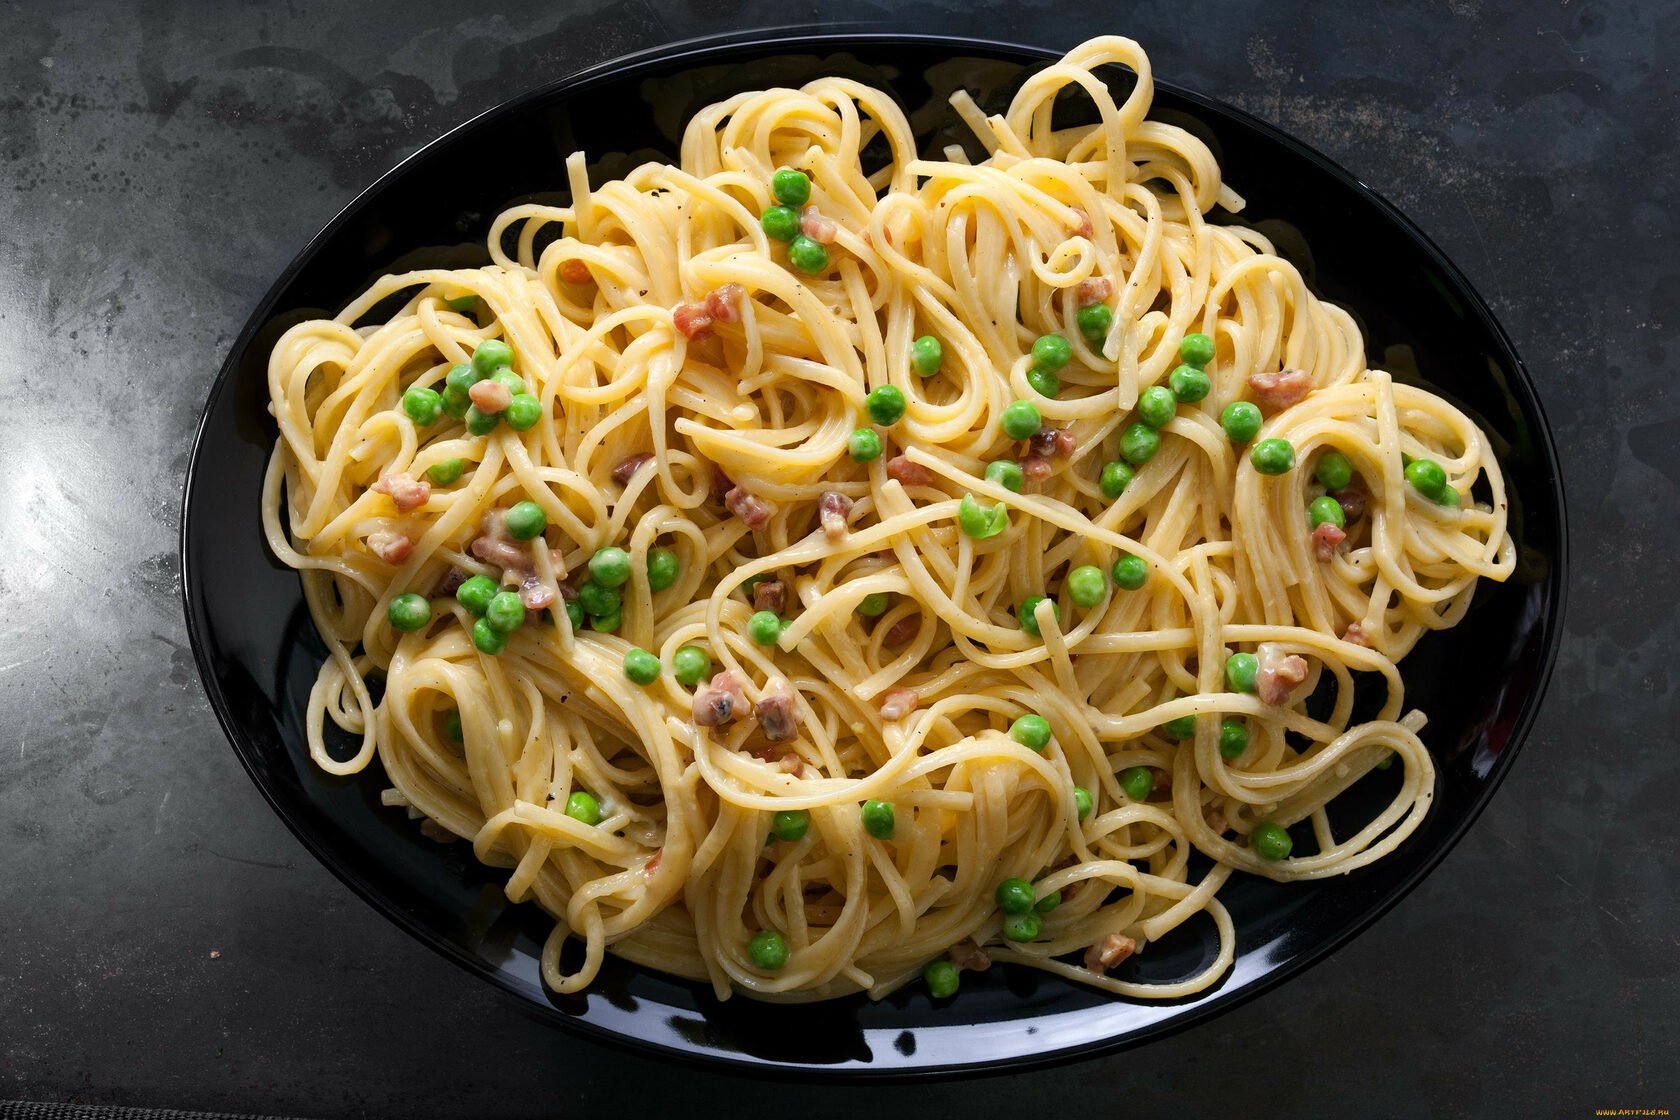 Some spaghetti. Итальянская паста. Спагетти. Паста спагетти. Спагетти паста Италия.